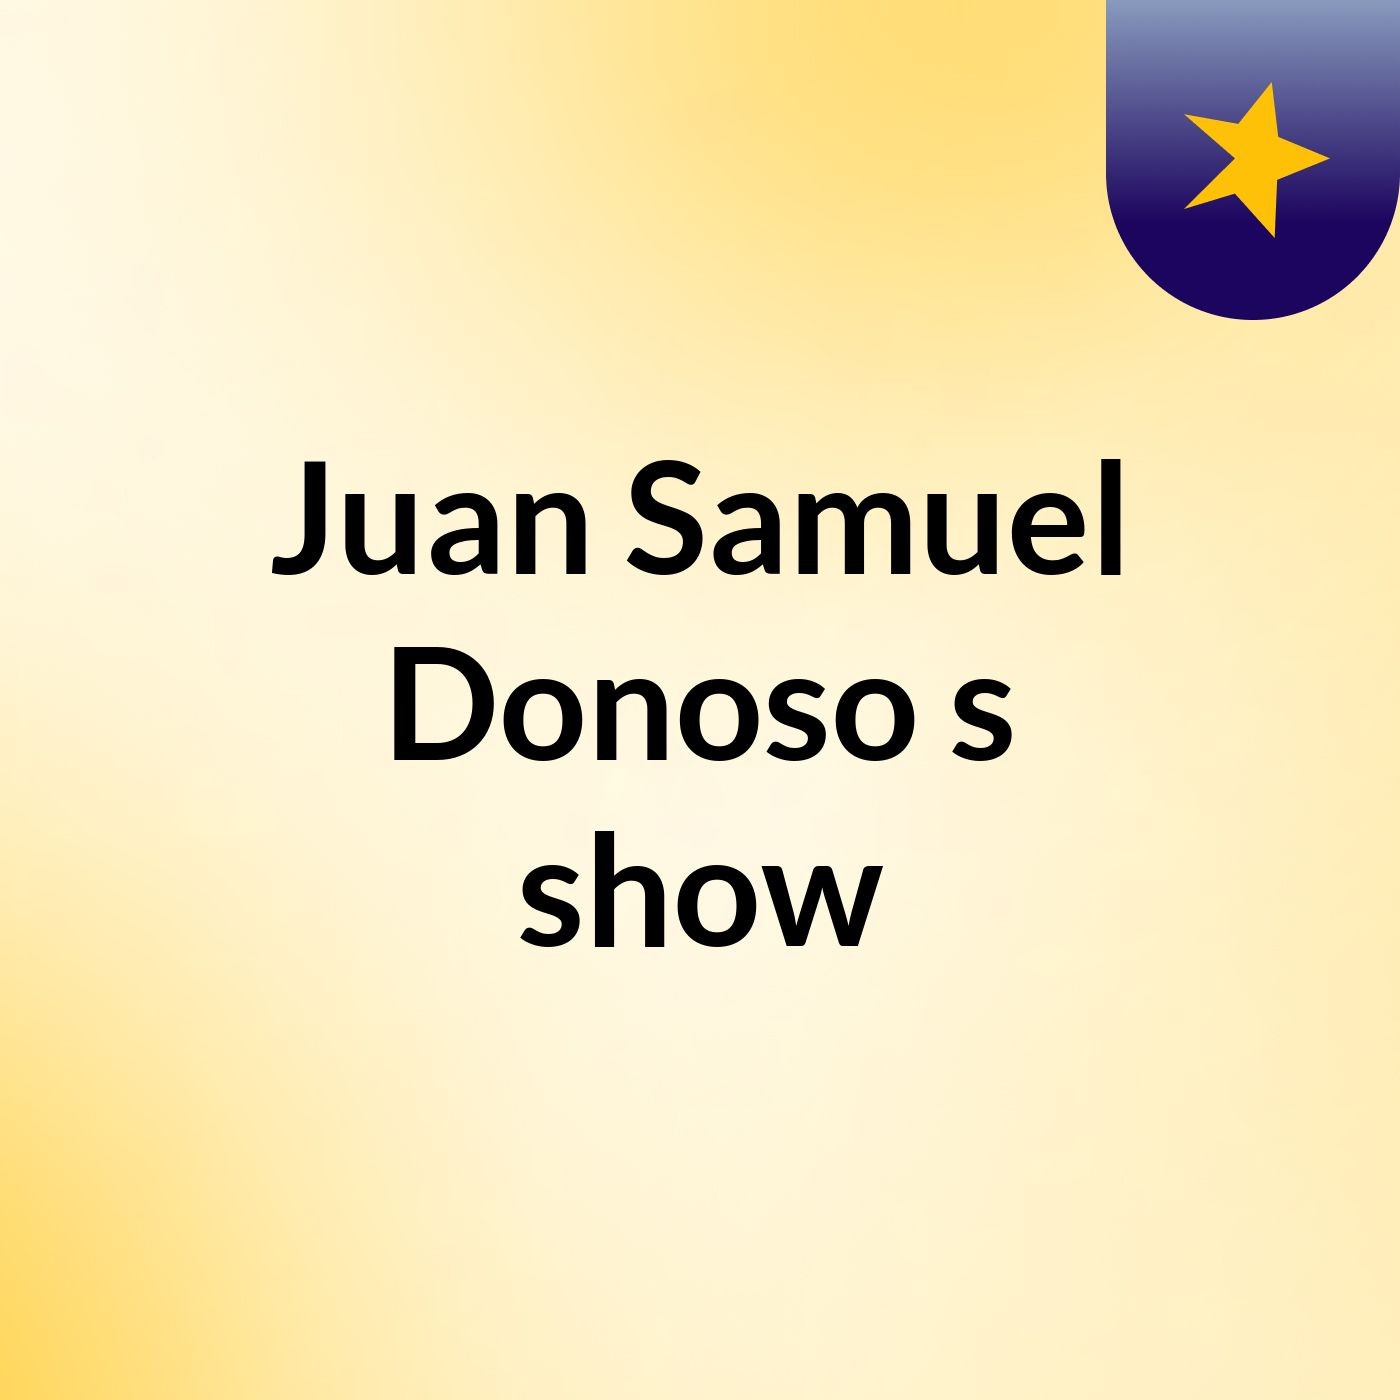 Juan Samuel Donoso's show